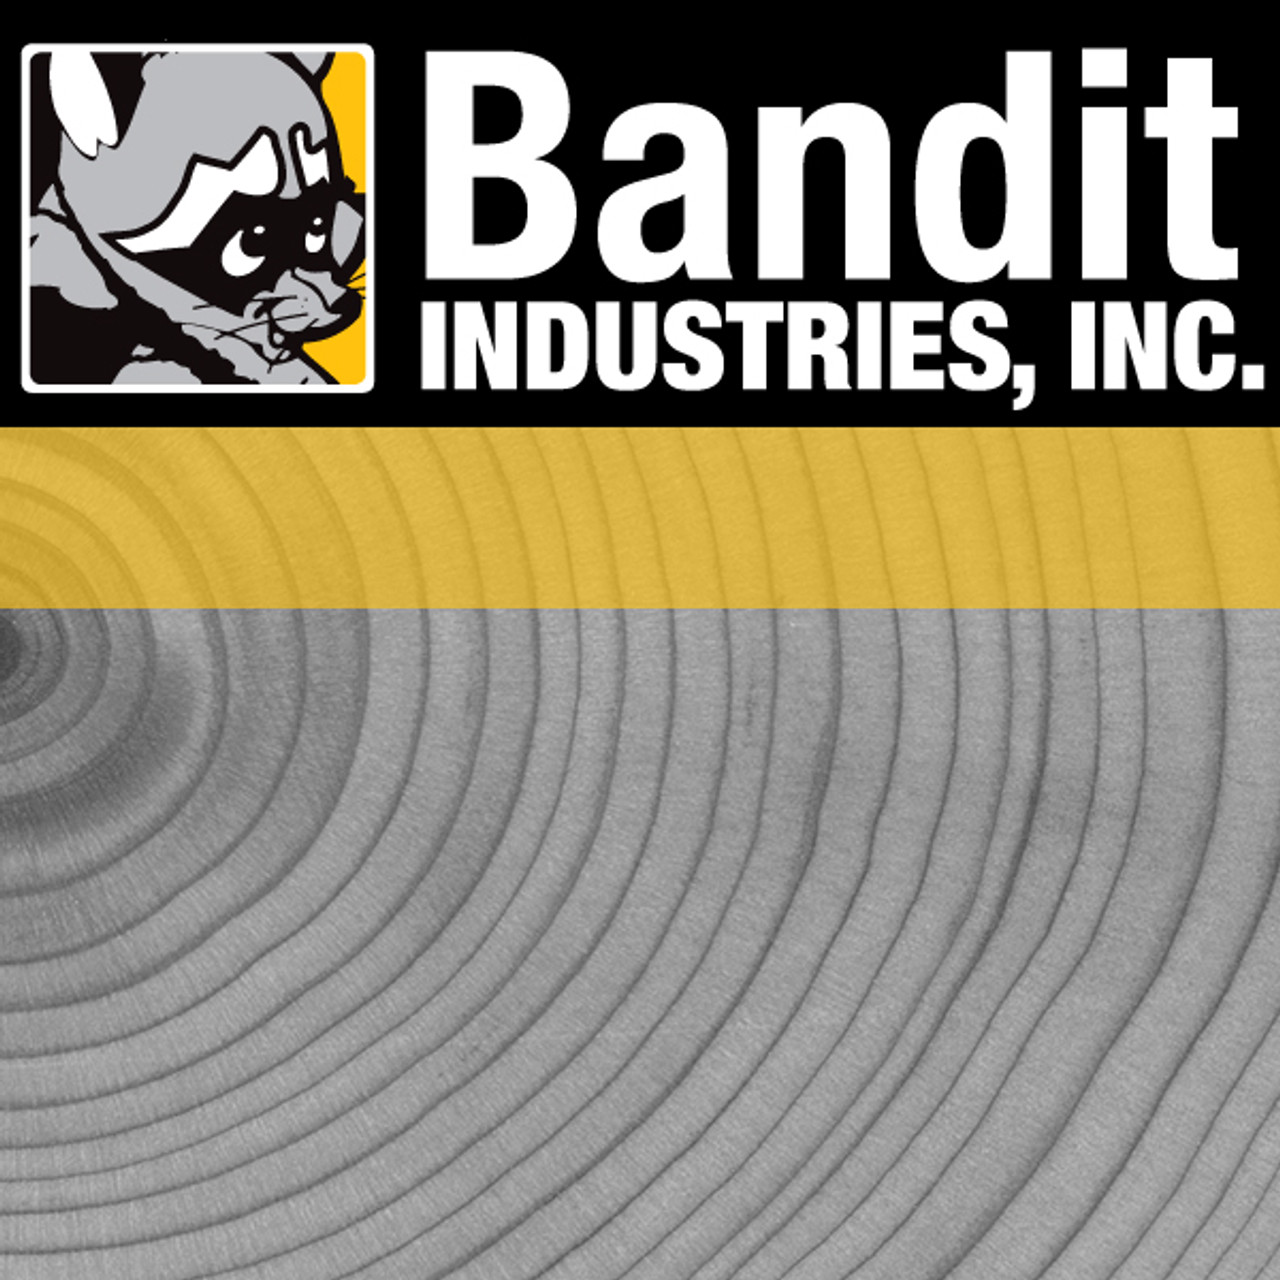 999-8005-07: Bandit Stumper Head Skid Steer Attachment Harness, 158"